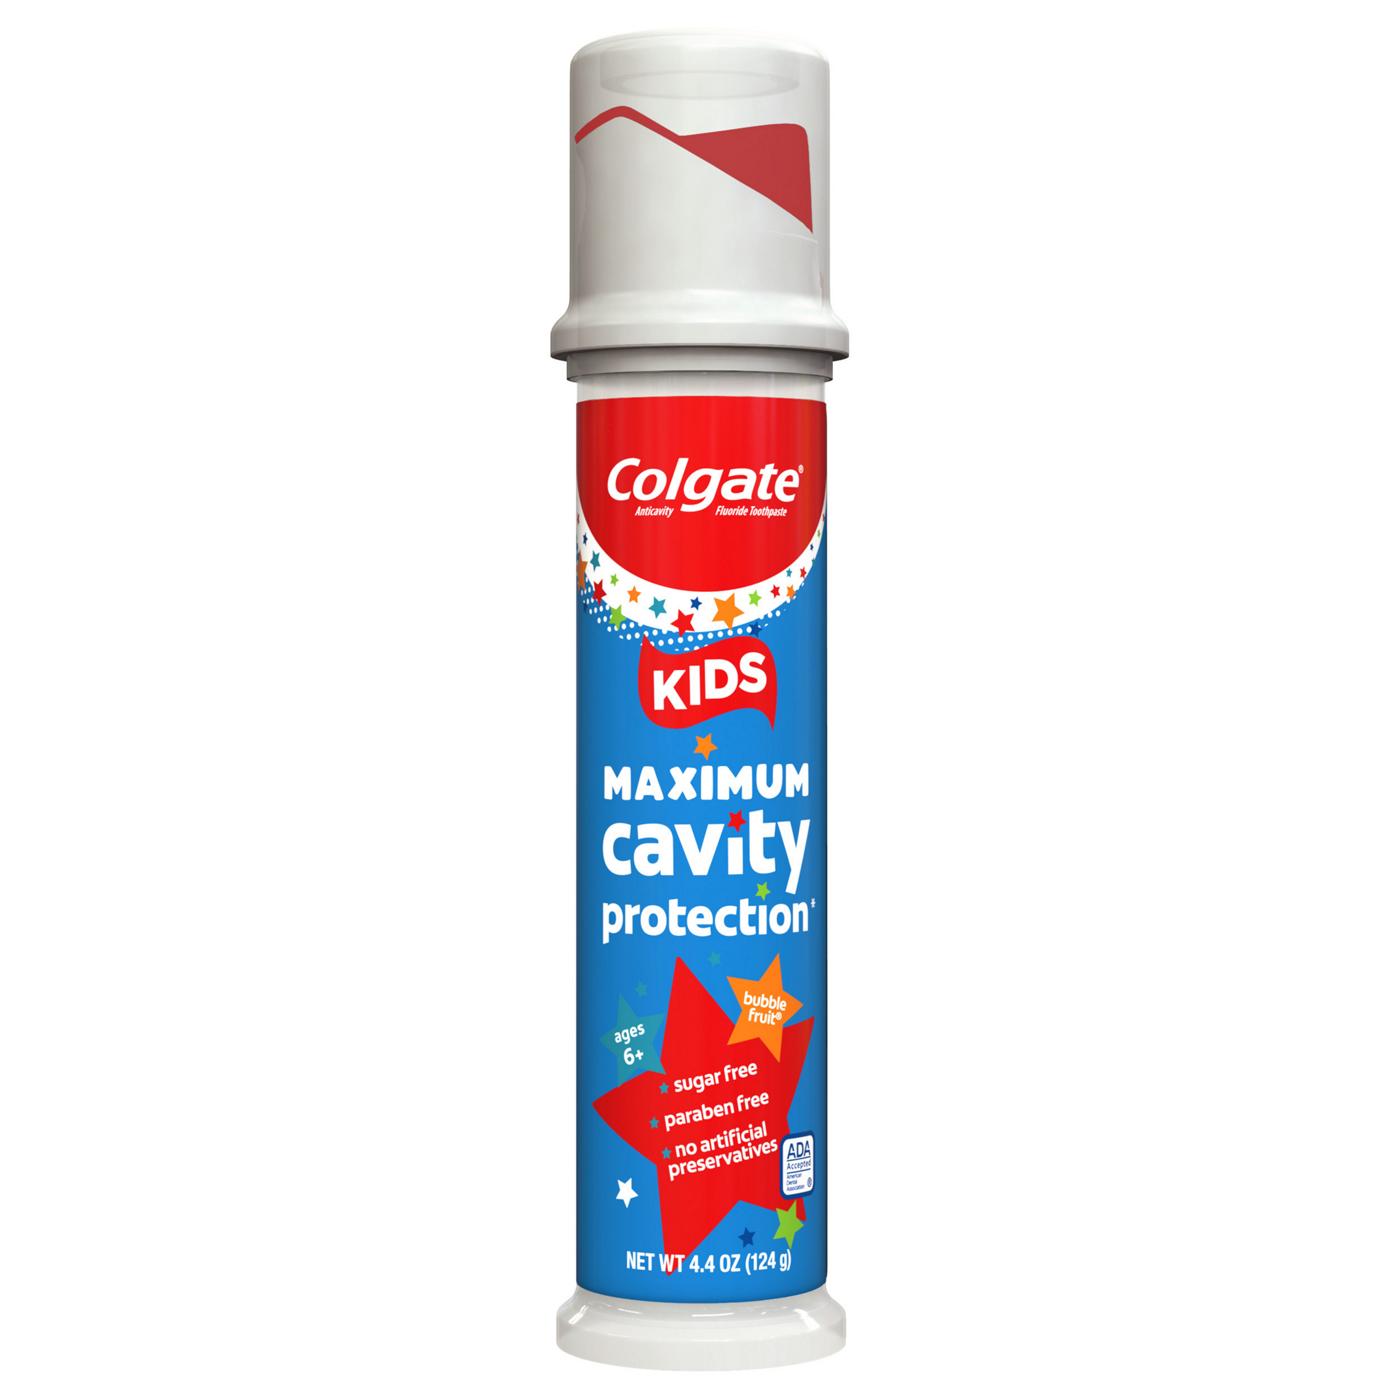 Colgate Kids Maximum Cavity Protection Toothpaste - Bubble Fruit; image 1 of 7